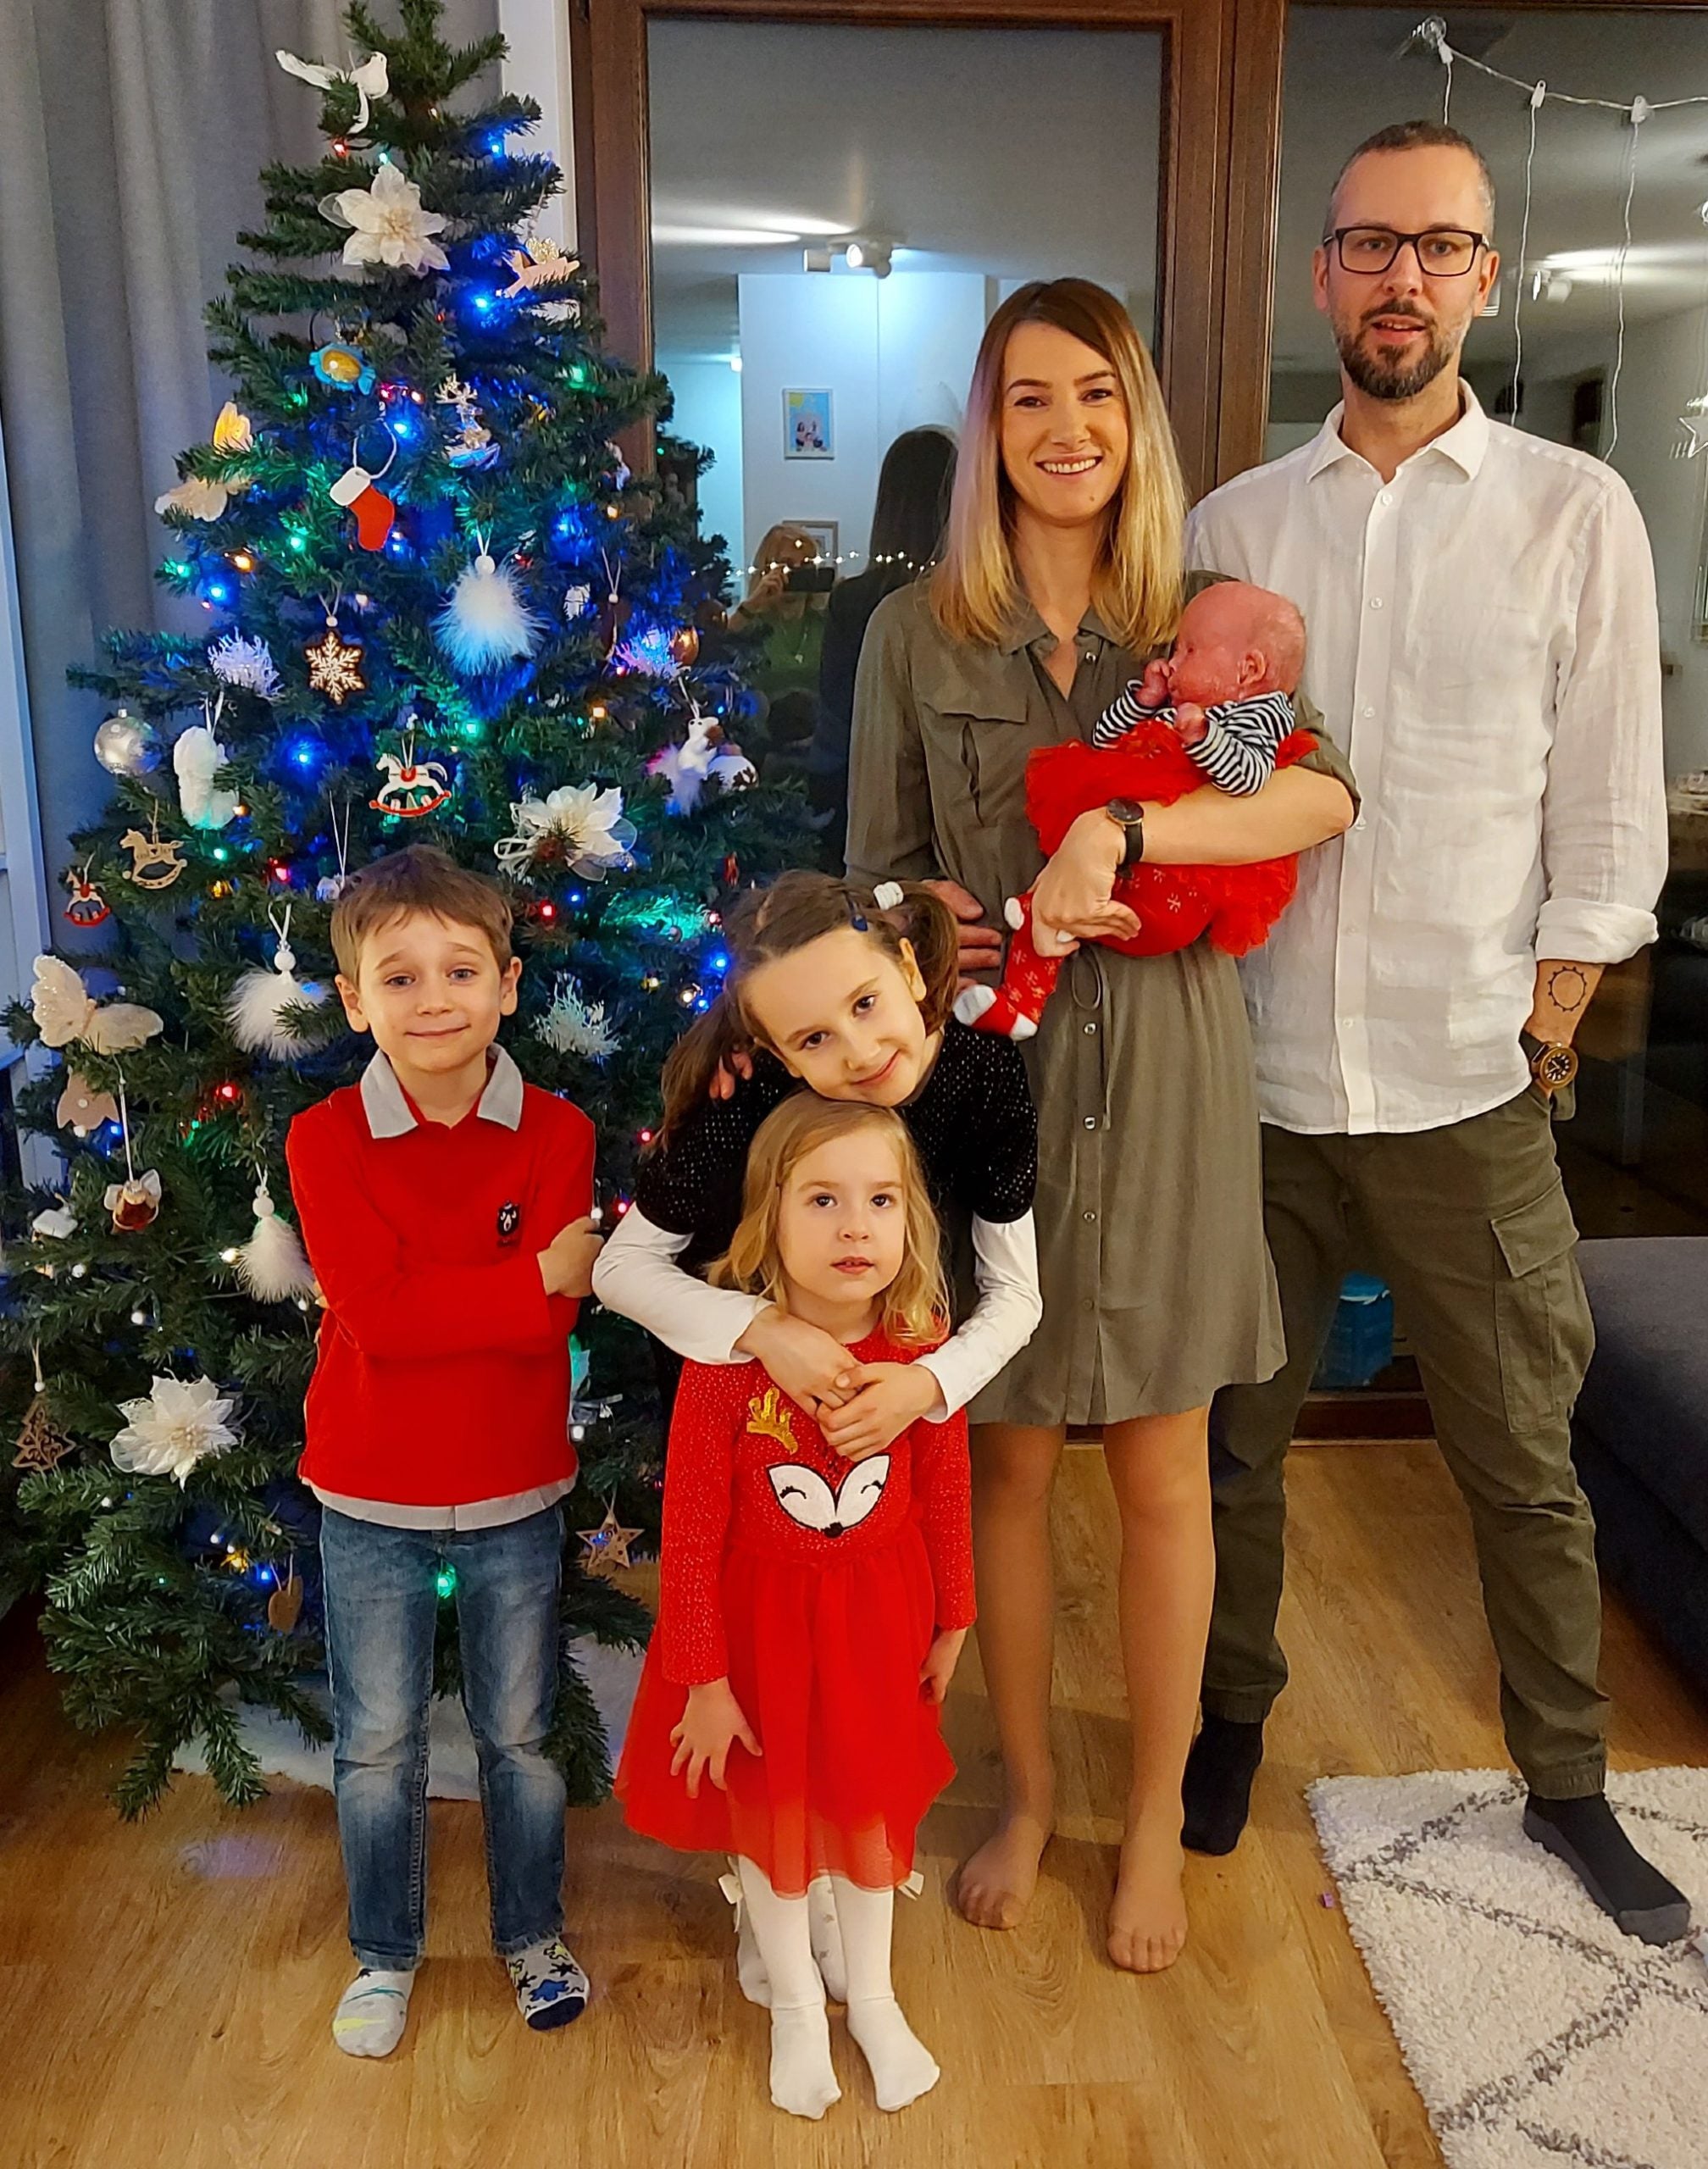 The Kadlecik family at Christmas in 2020